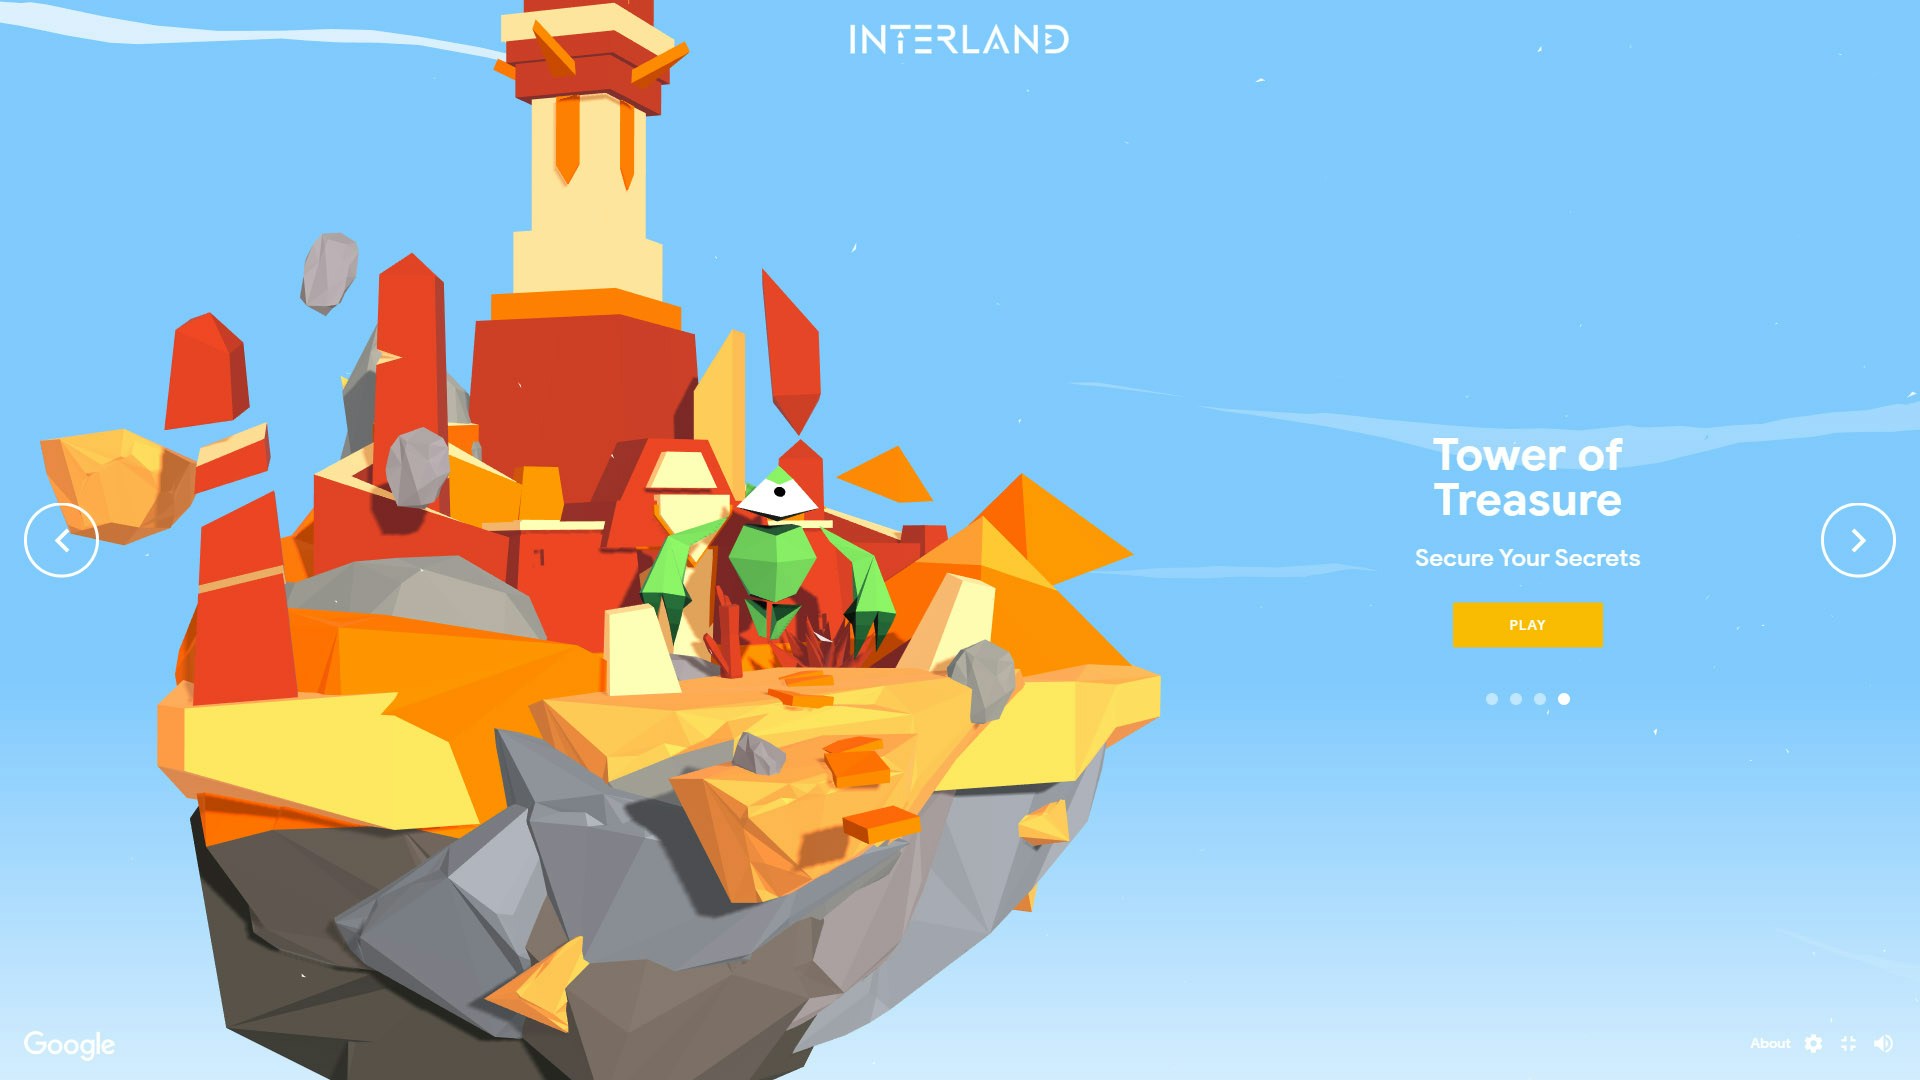 Google Interland Tower of Treasure overview